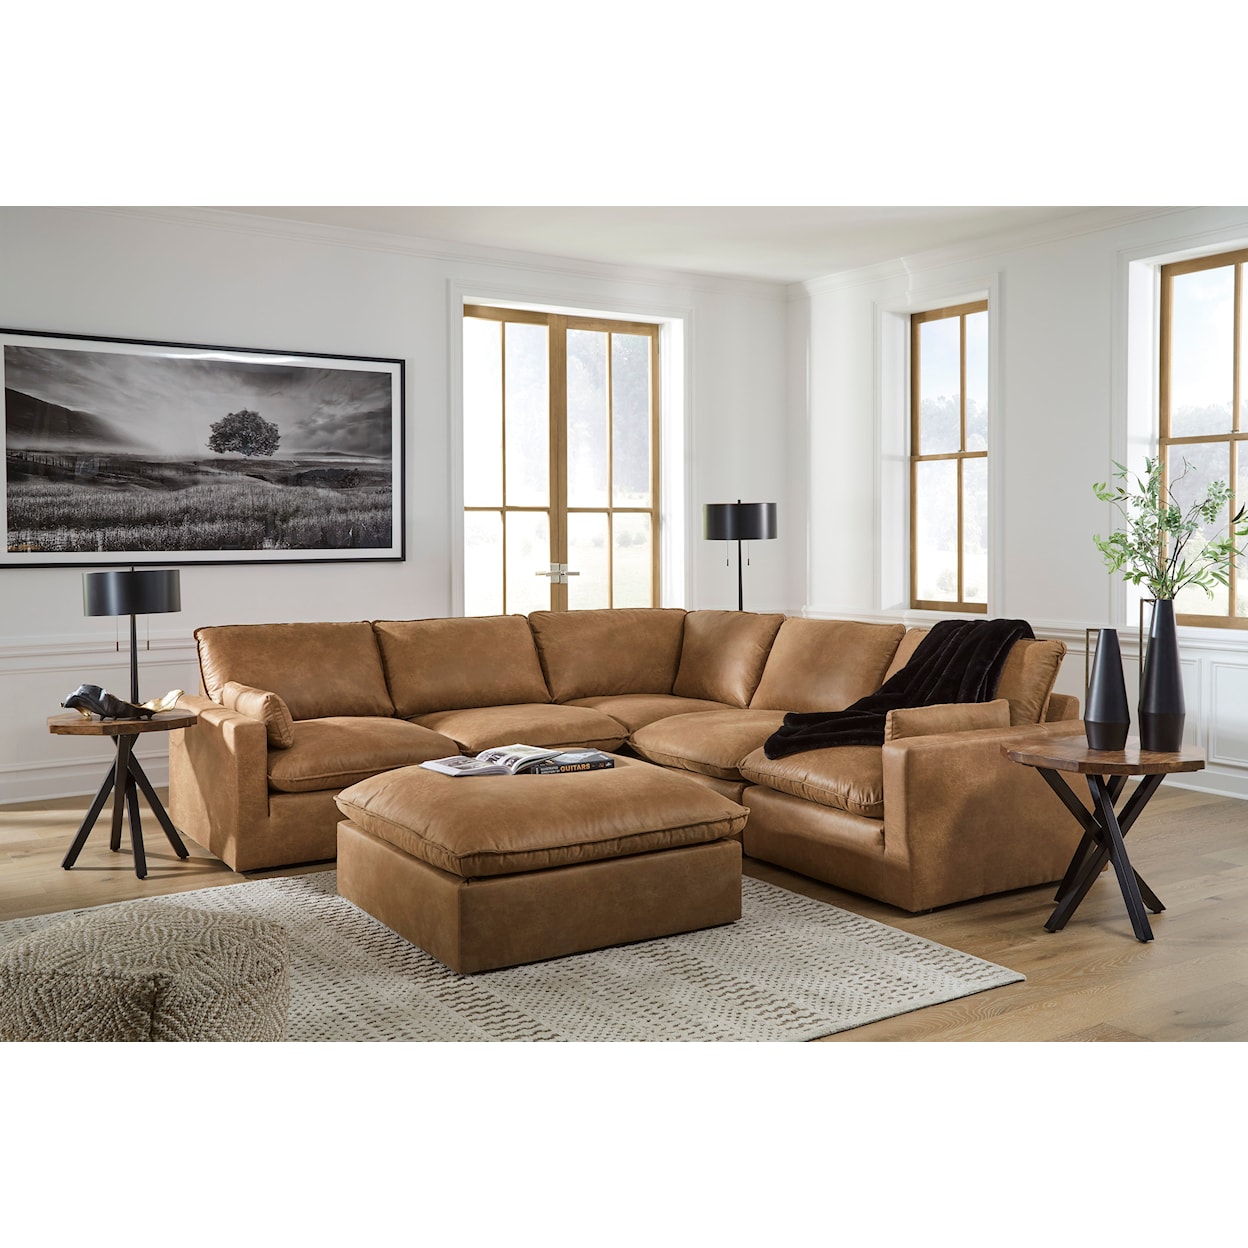 Benchcraft Marlaina Living Room Set